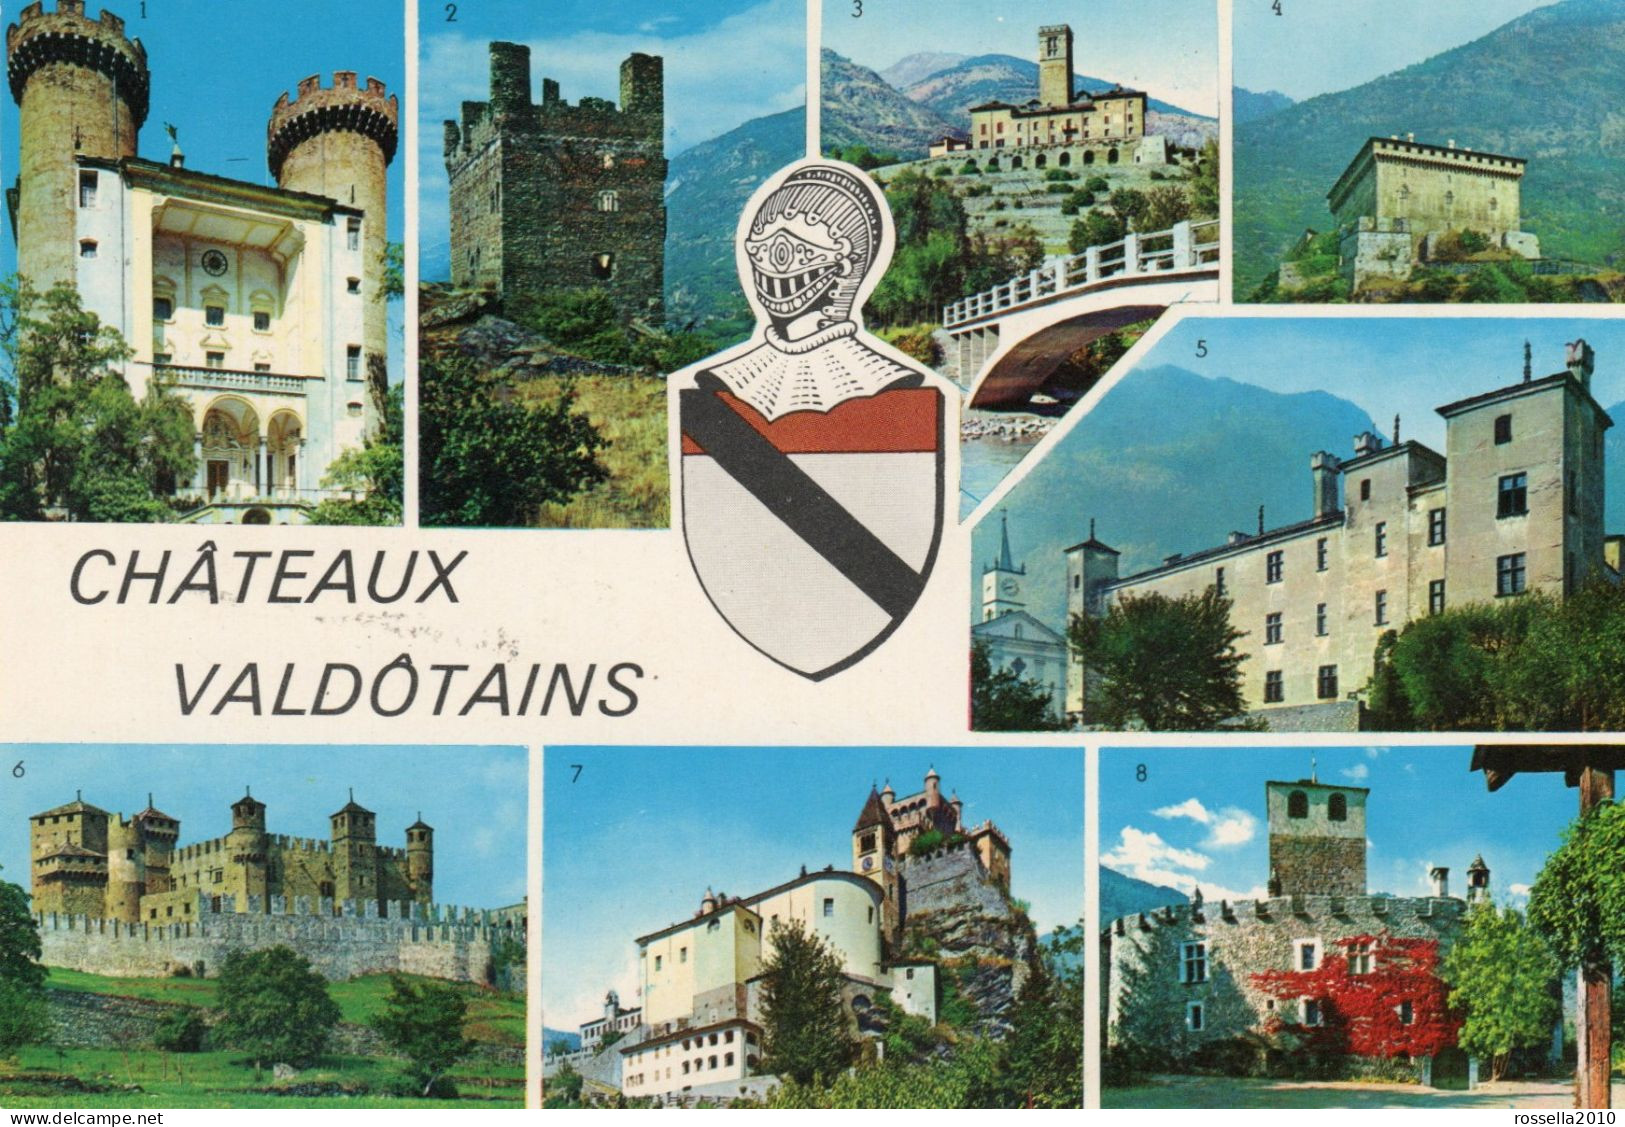 CARTOLINA 1975 ITALIA VALLE D' AOSTA CASTELLI CHATEAU VALDOTAINS SALUTI VEDUTINE Italy Postcard ITALIEN Ansichtskarten - Souvenir De...